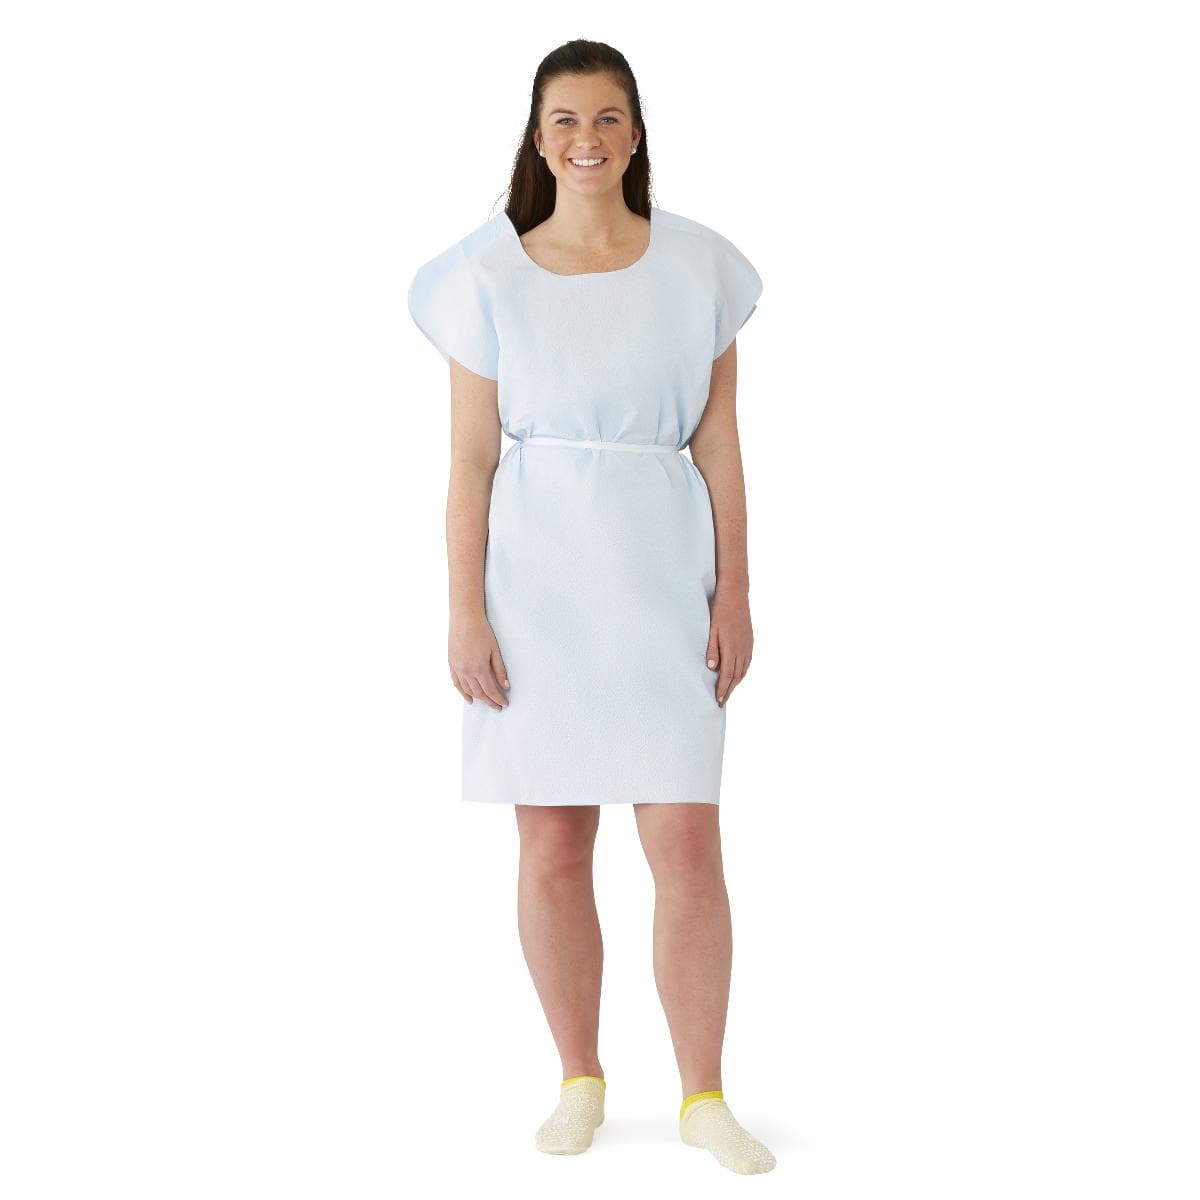 Medline Medline Disposable Patient Gowns NON24356